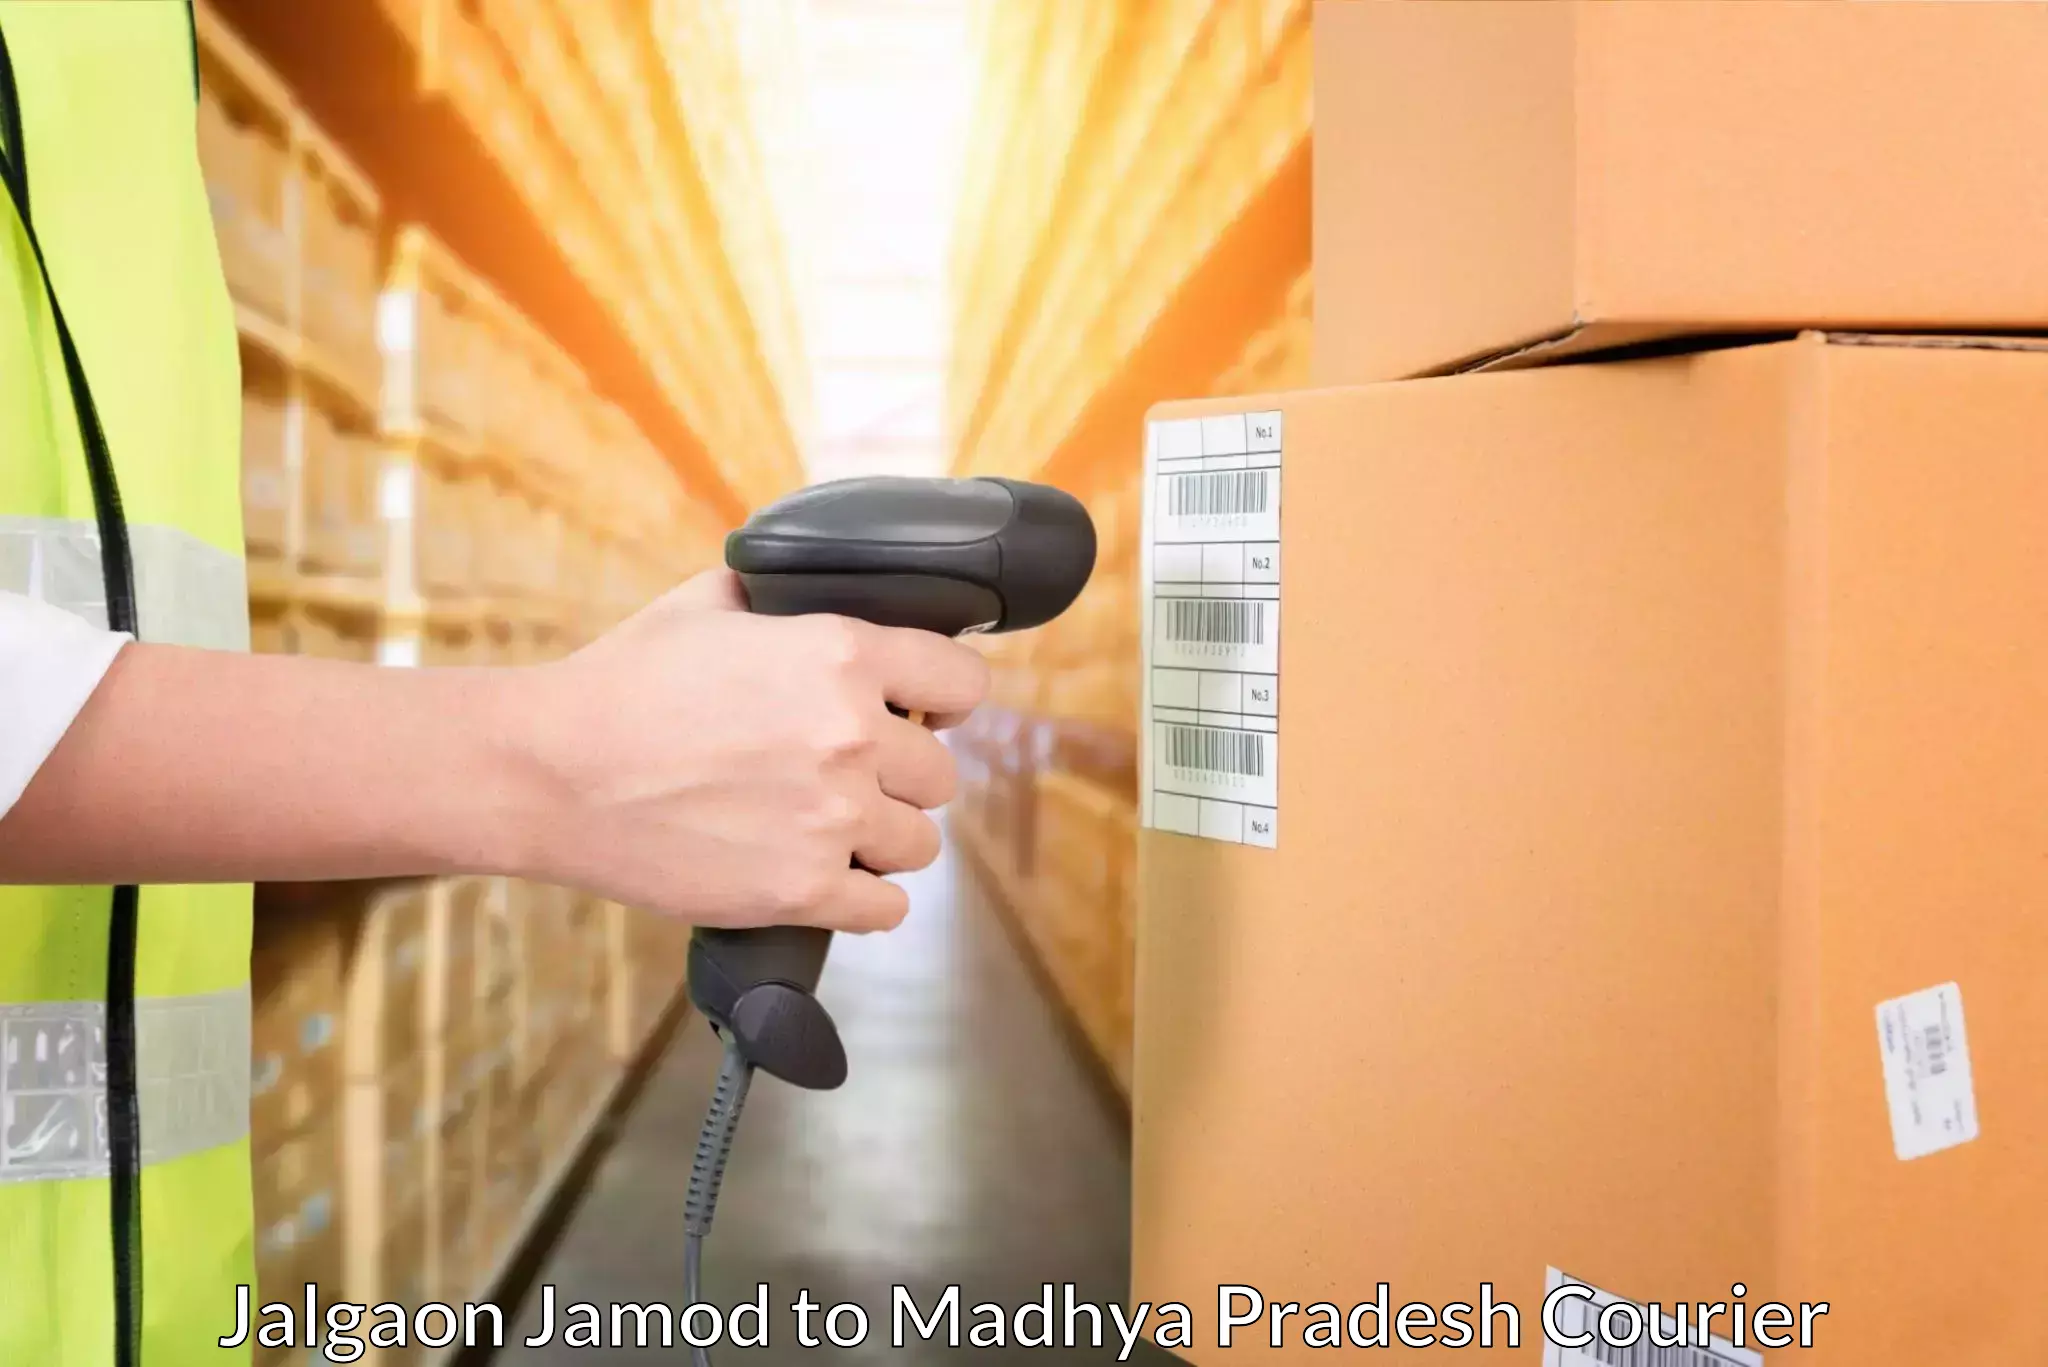 Customizable delivery plans Jalgaon Jamod to Vidisha